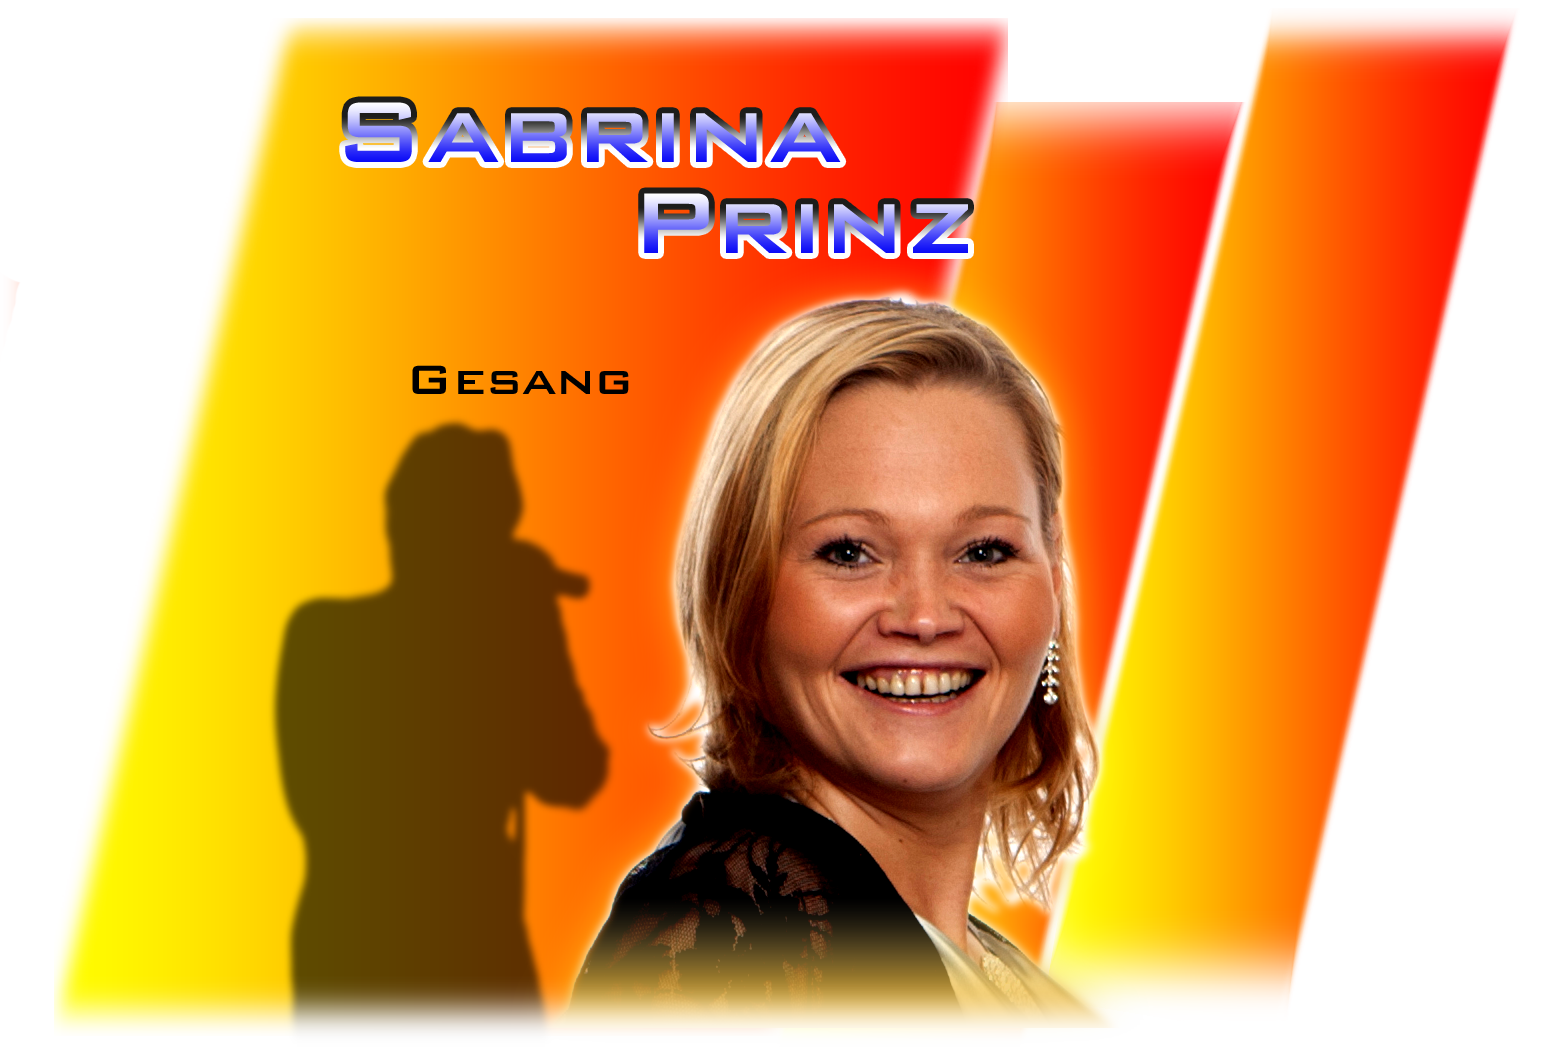 Sabrina Prinz